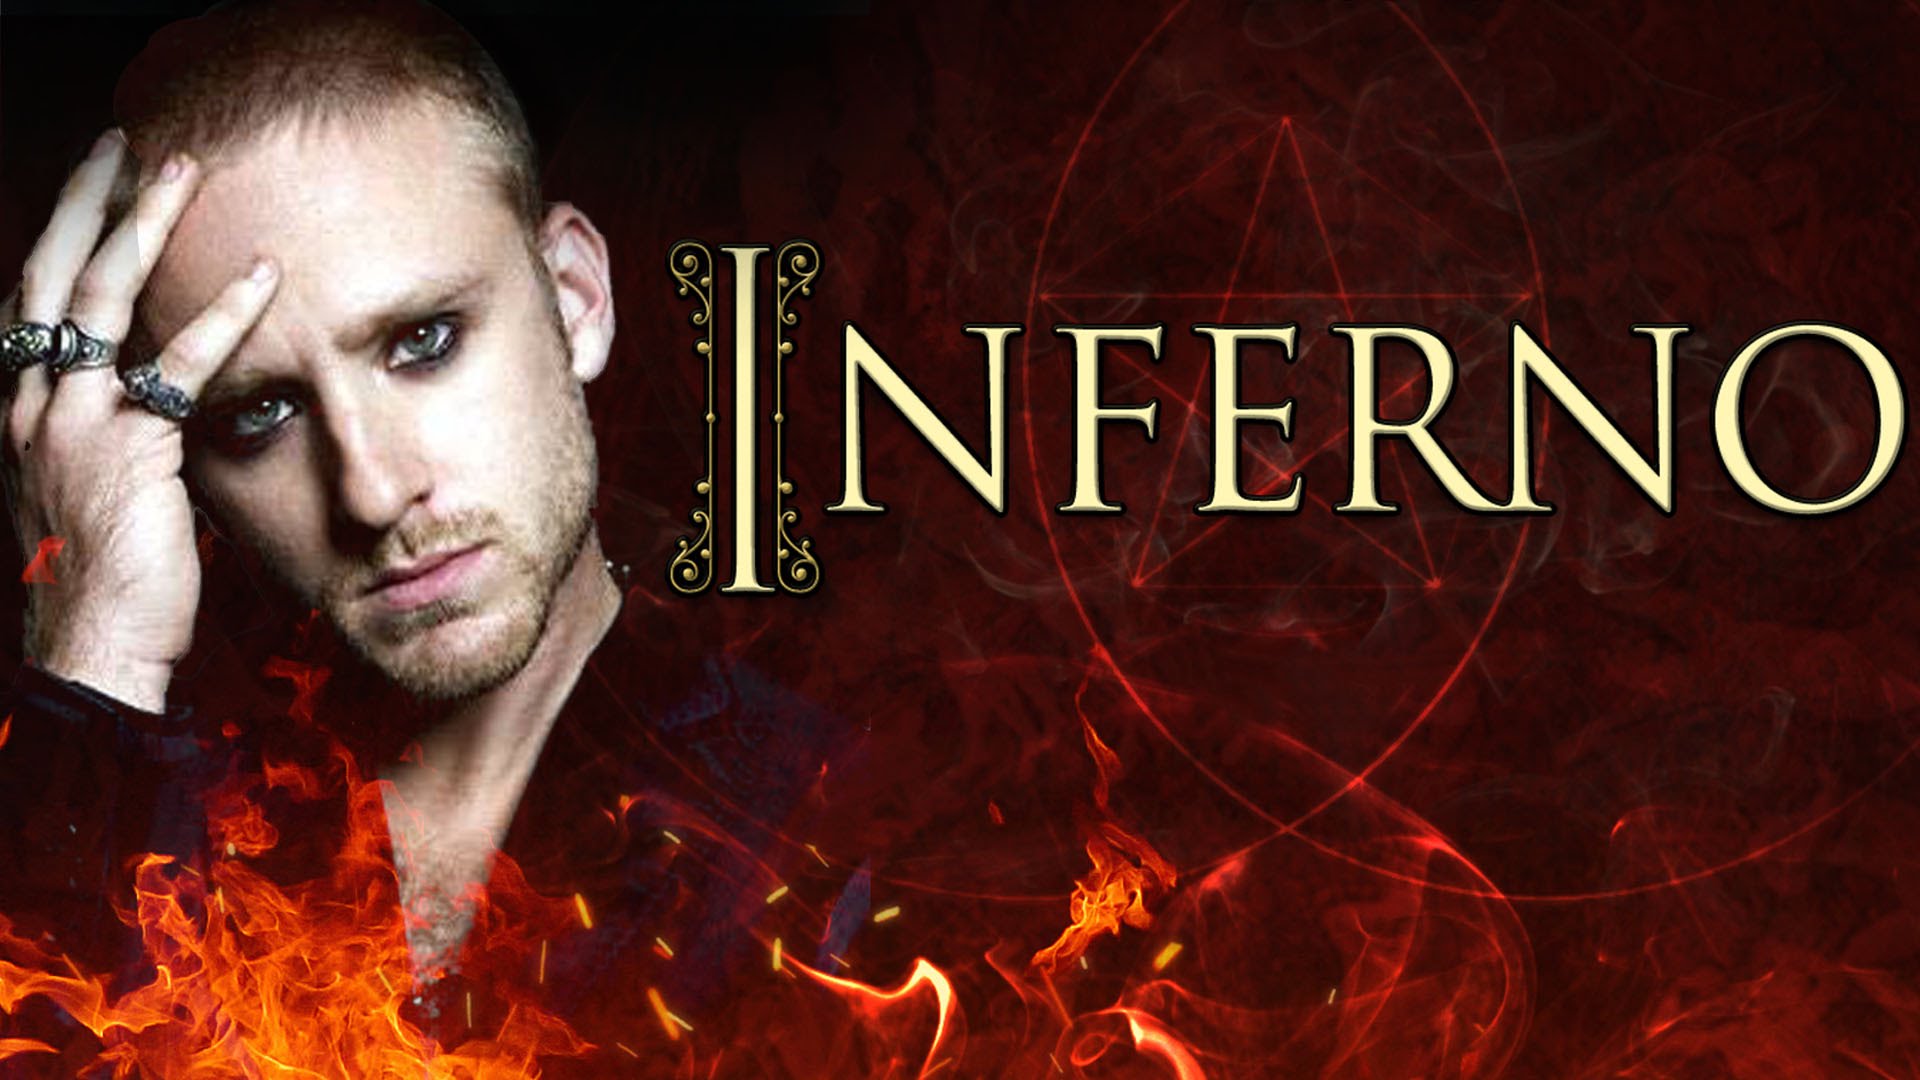 Inferno Film Full-Length Watch Online